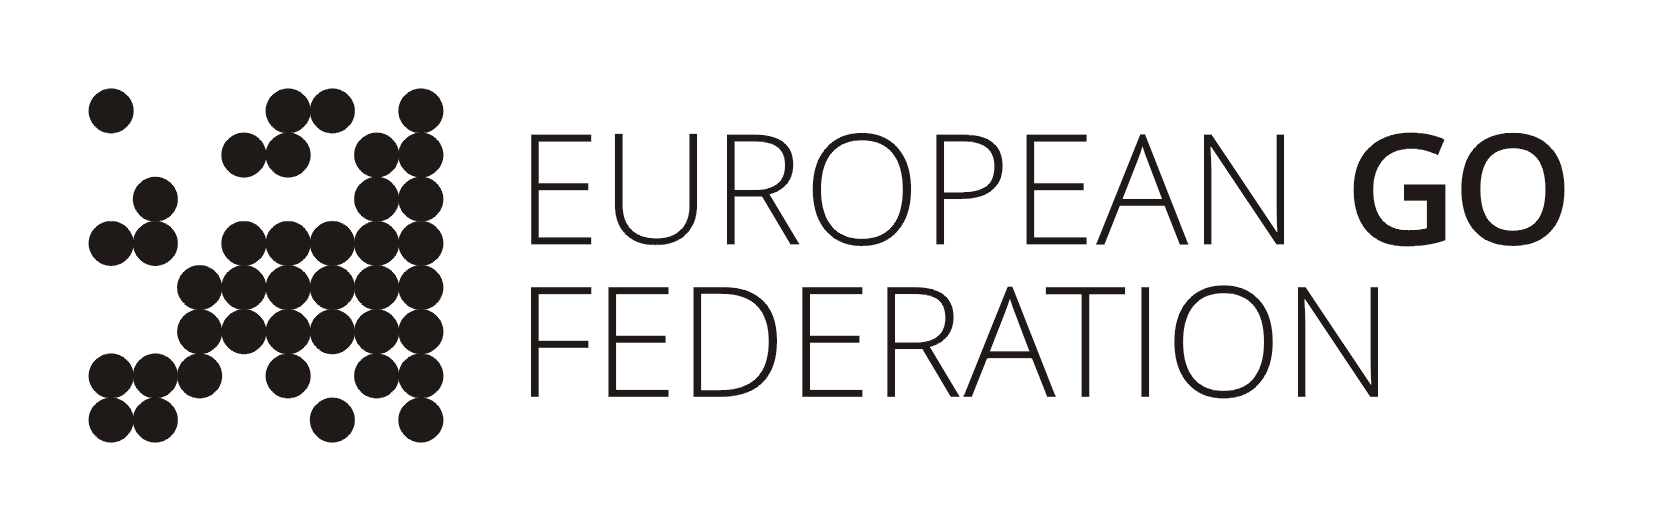 Go eu. Европейские логотипы. Евросоюз логотип. Federation go. Federation go KGD.